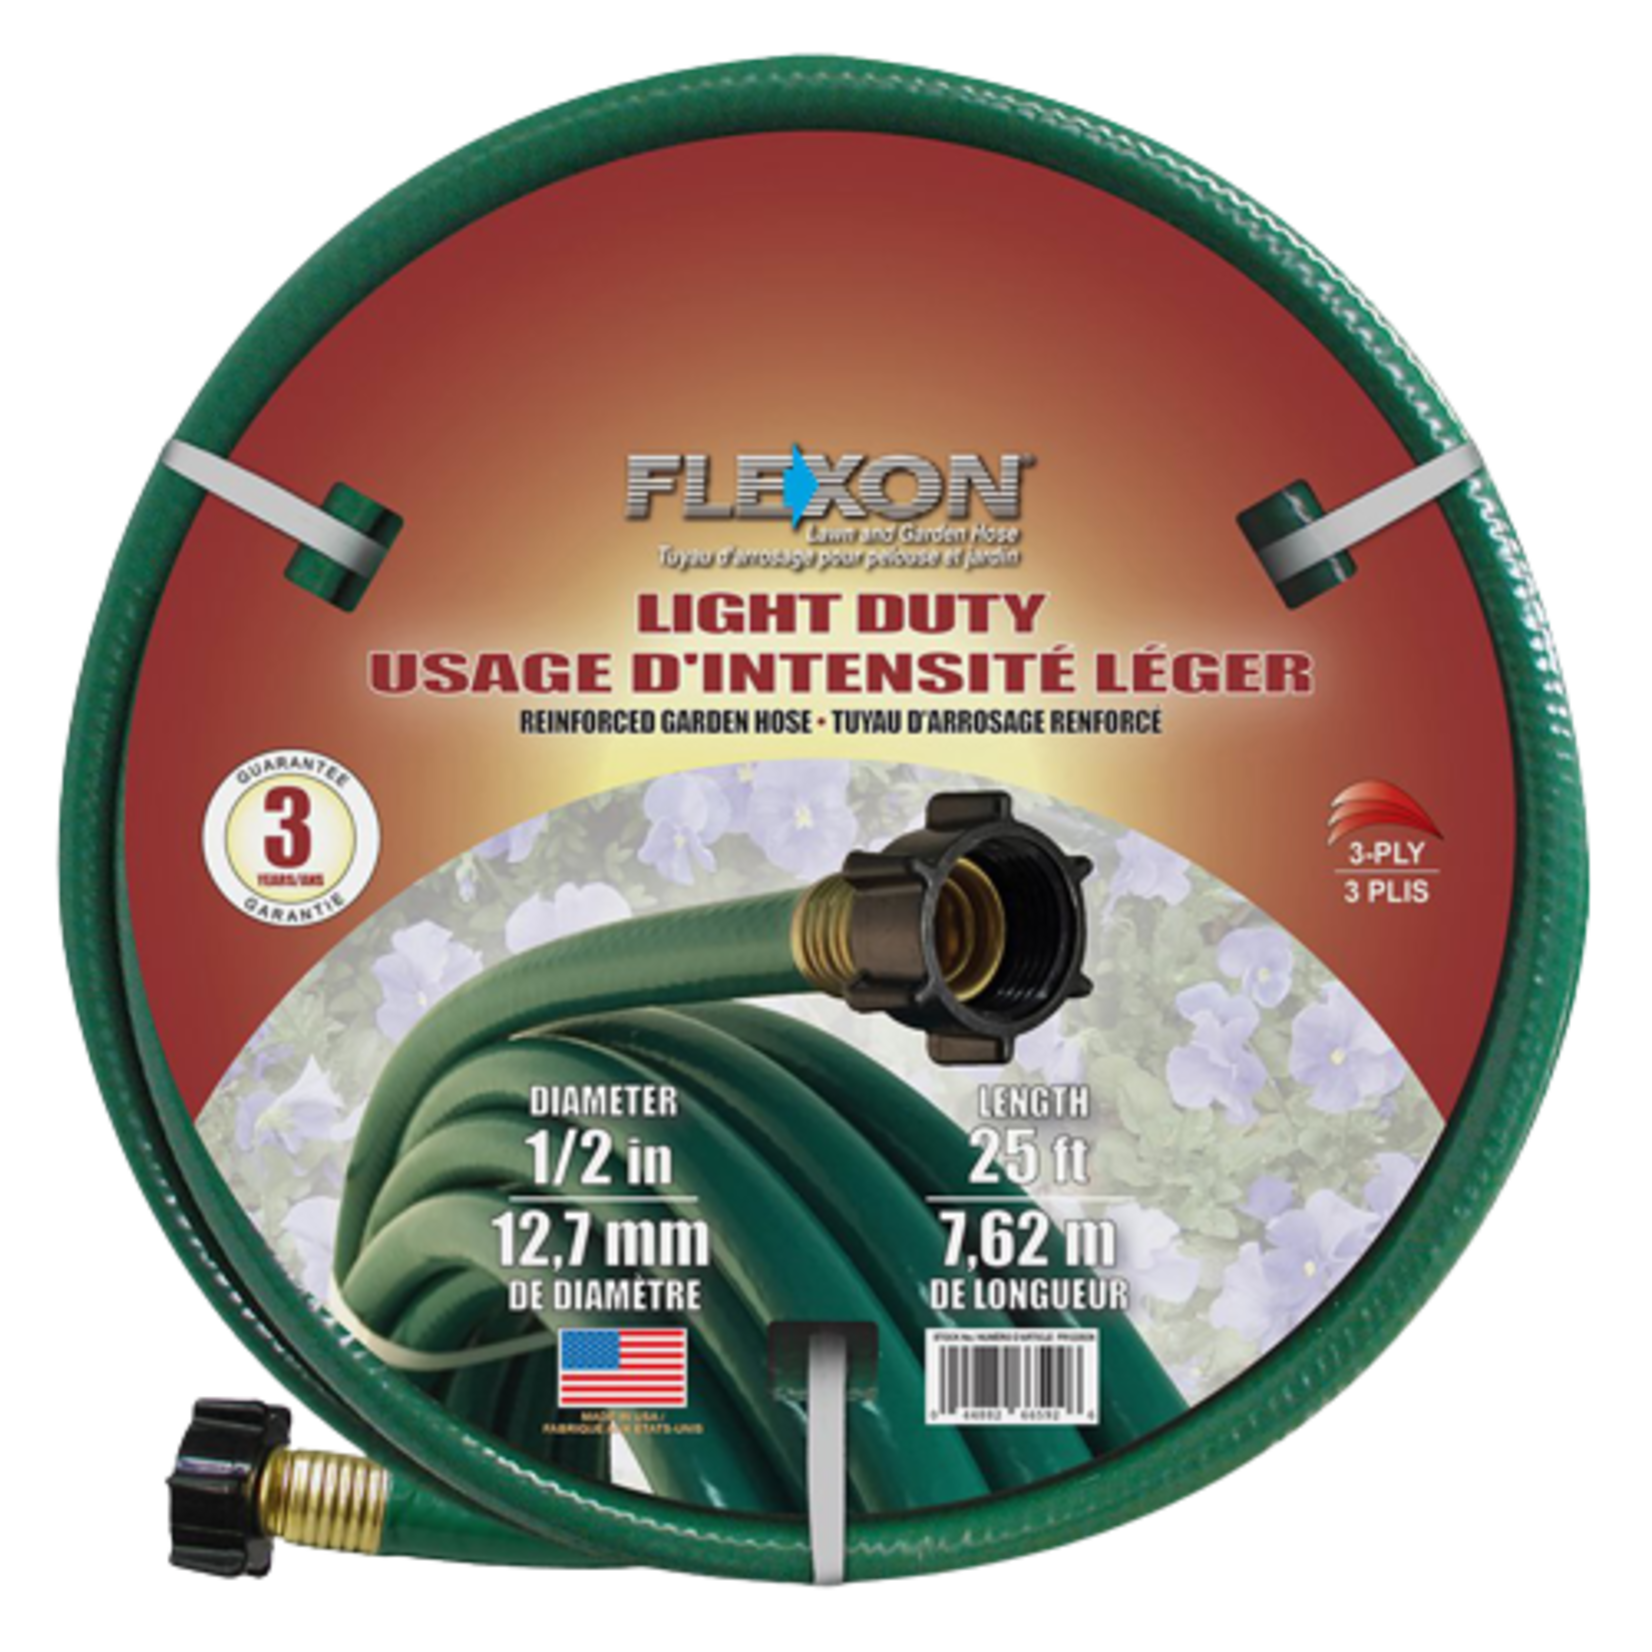 LIGHT DUTY REINFORCED GREEN HOSE - 1/2 INCH DIAMETER, 25FT LENGTH